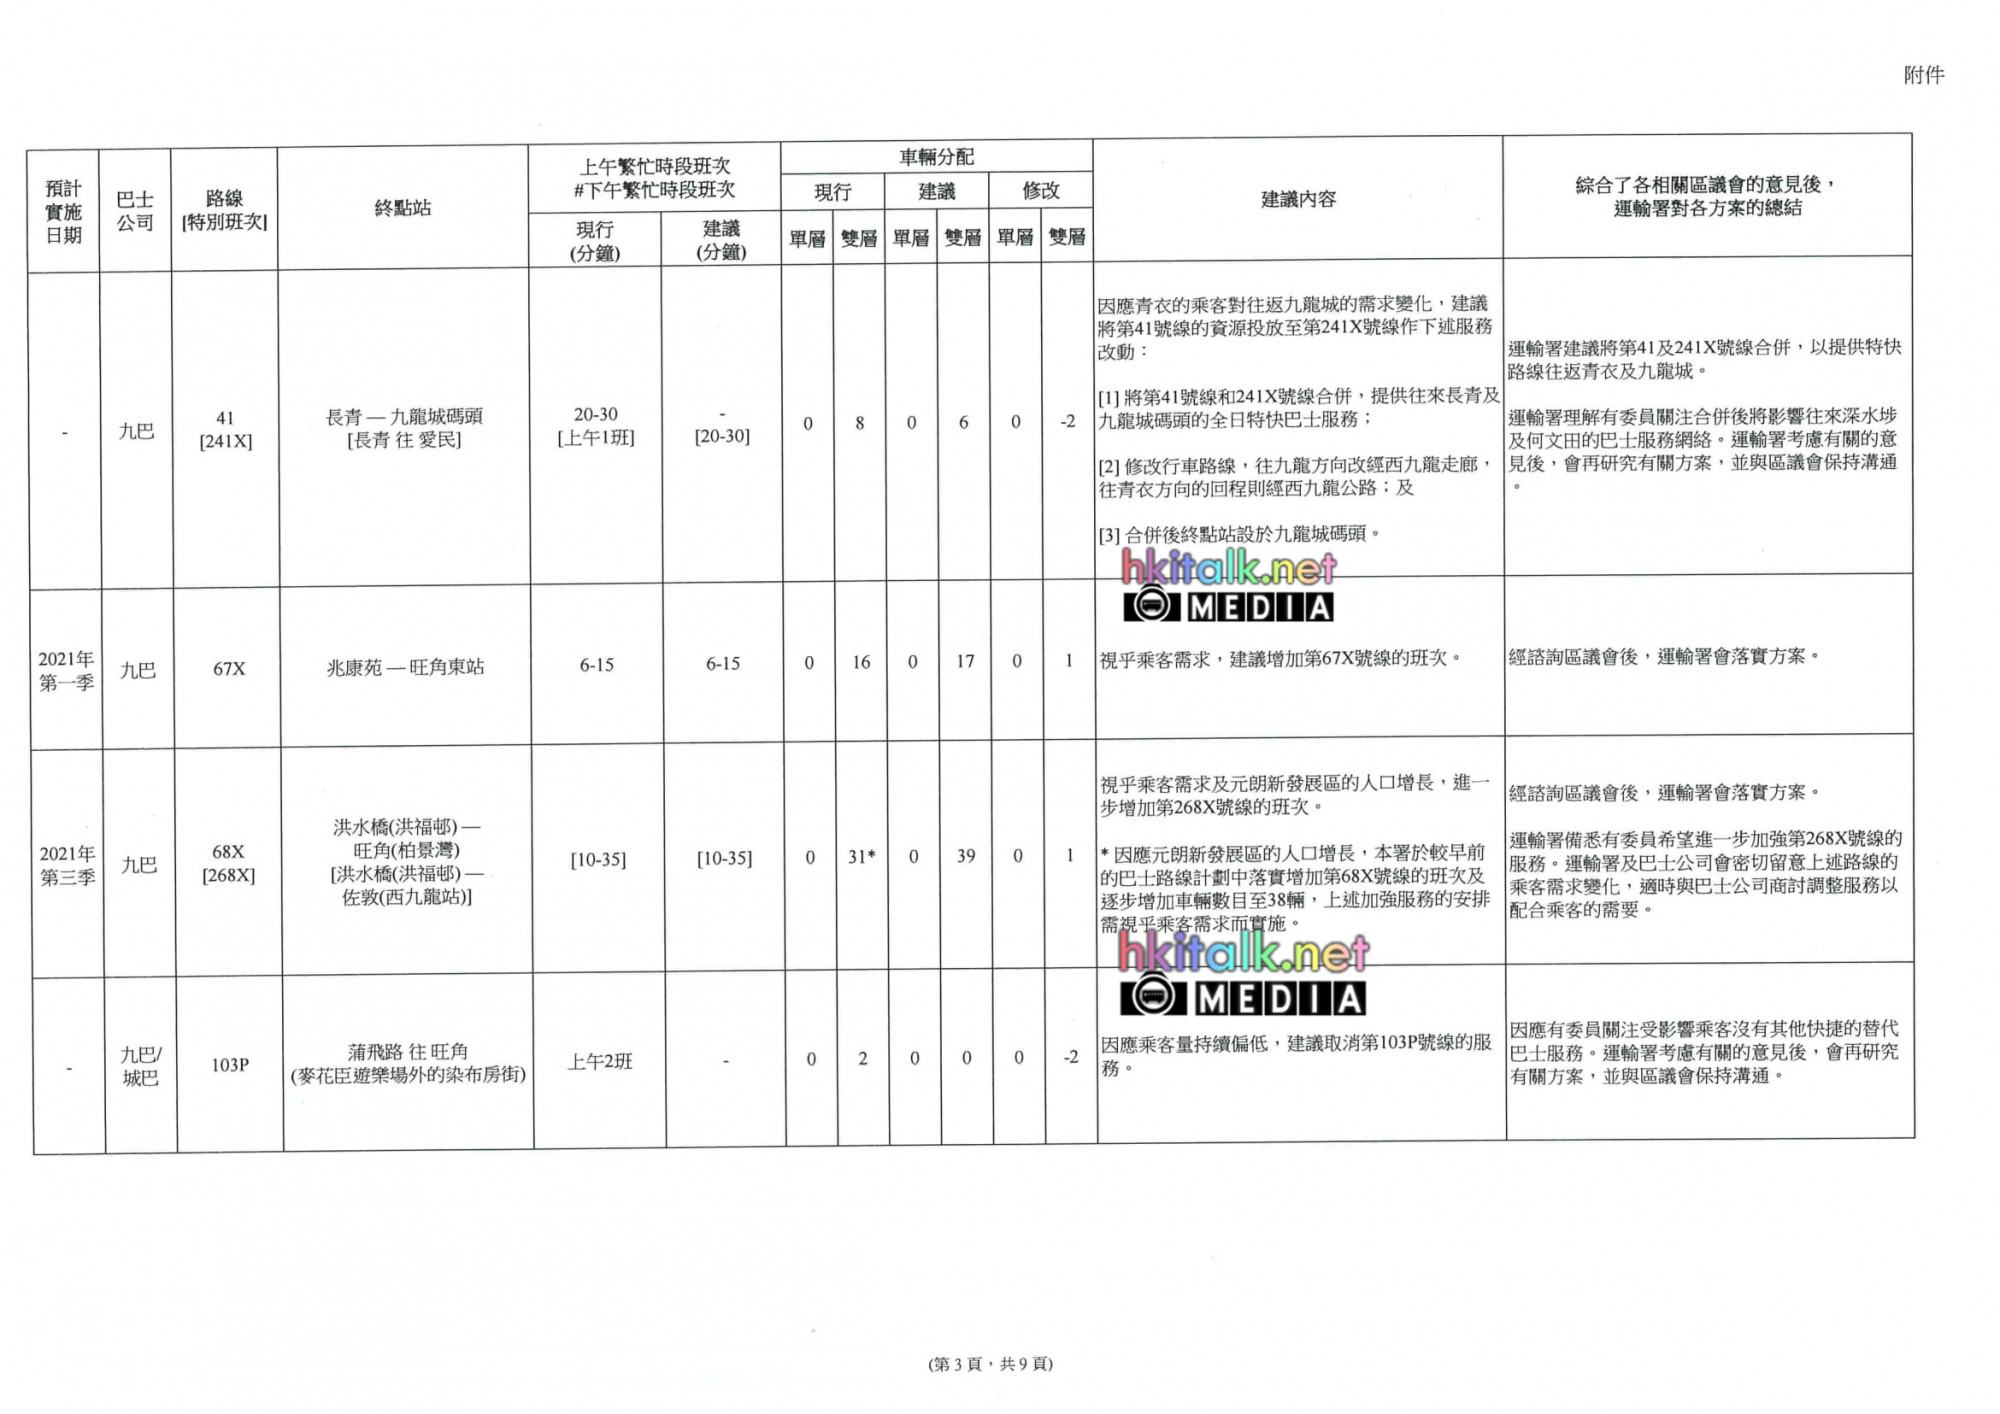 Route Planning Programme 2020-2021 for Yau Tsim Mong-04.jpg